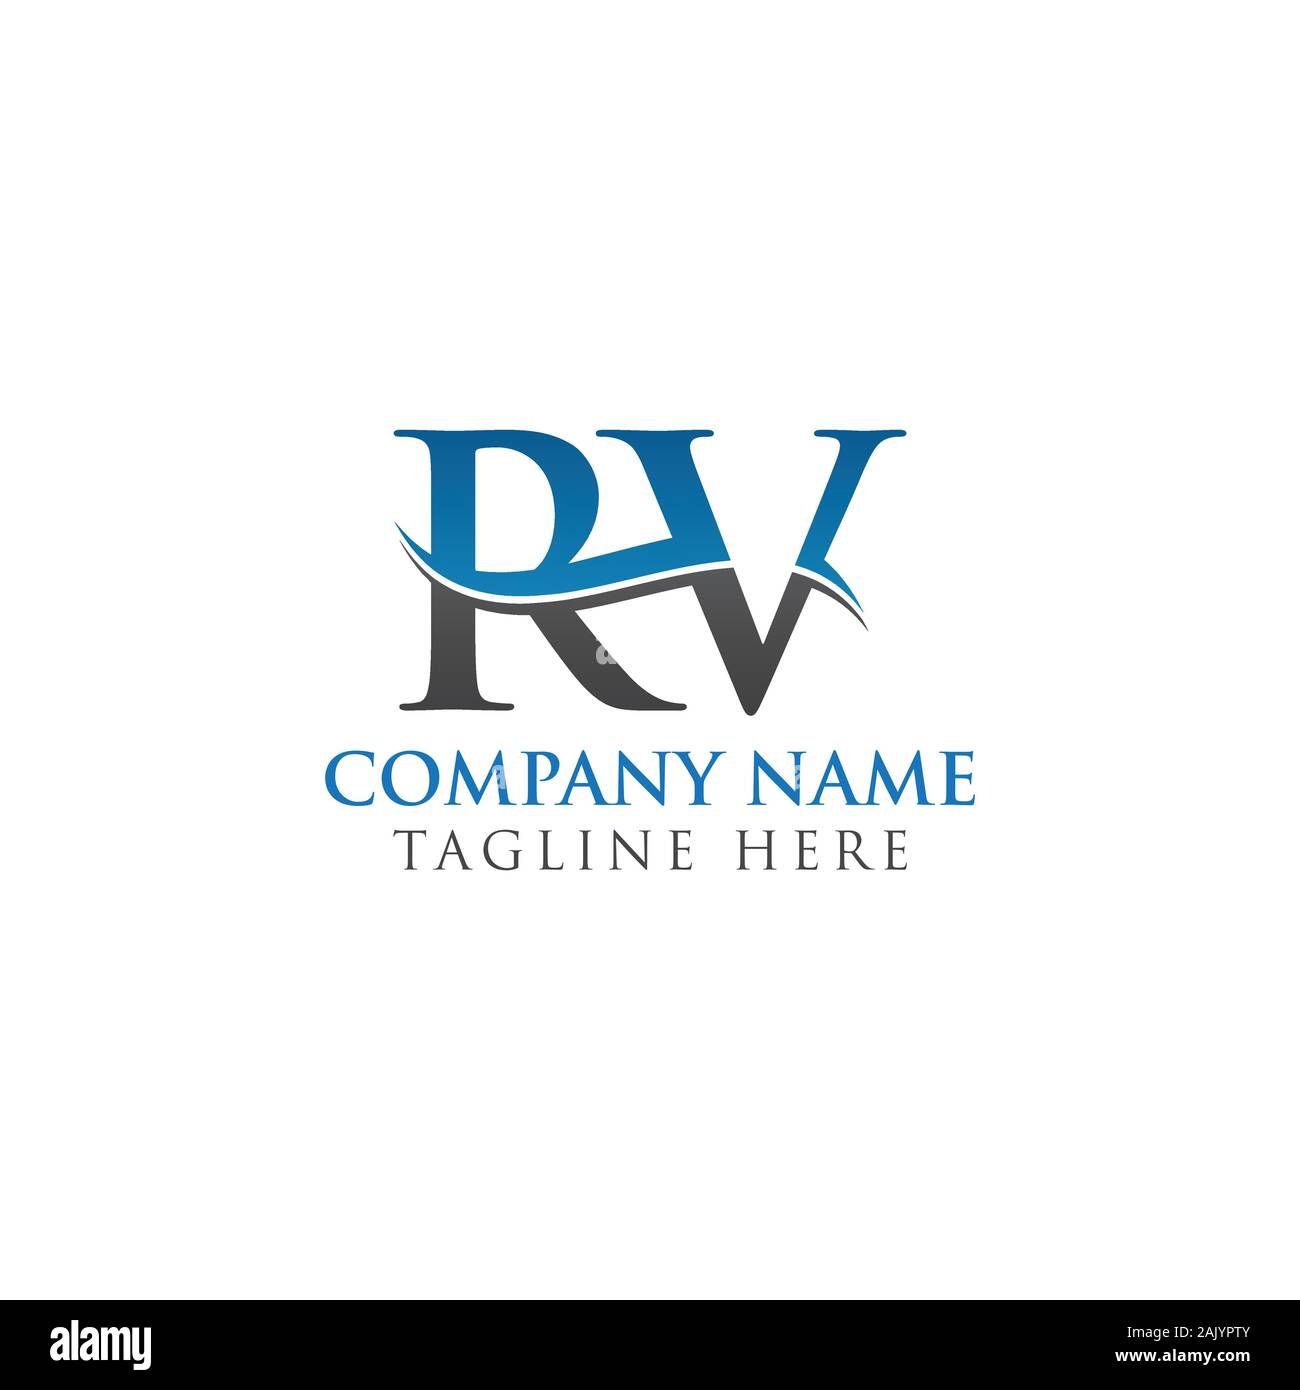 rv logo images